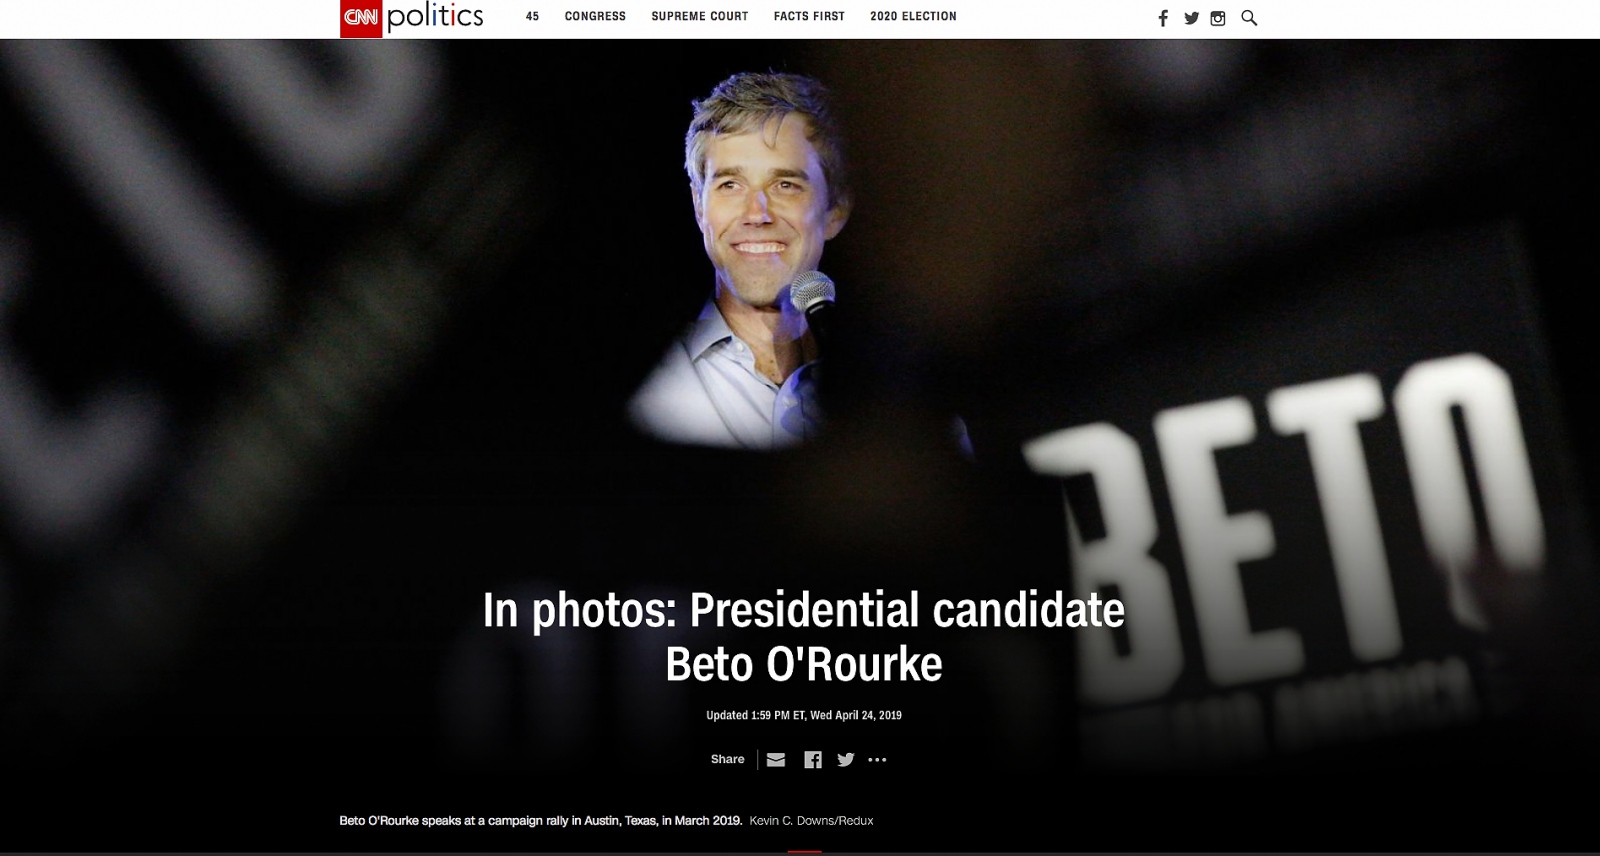 on CNN Photos: Presidential candidate Beto O'Rourke